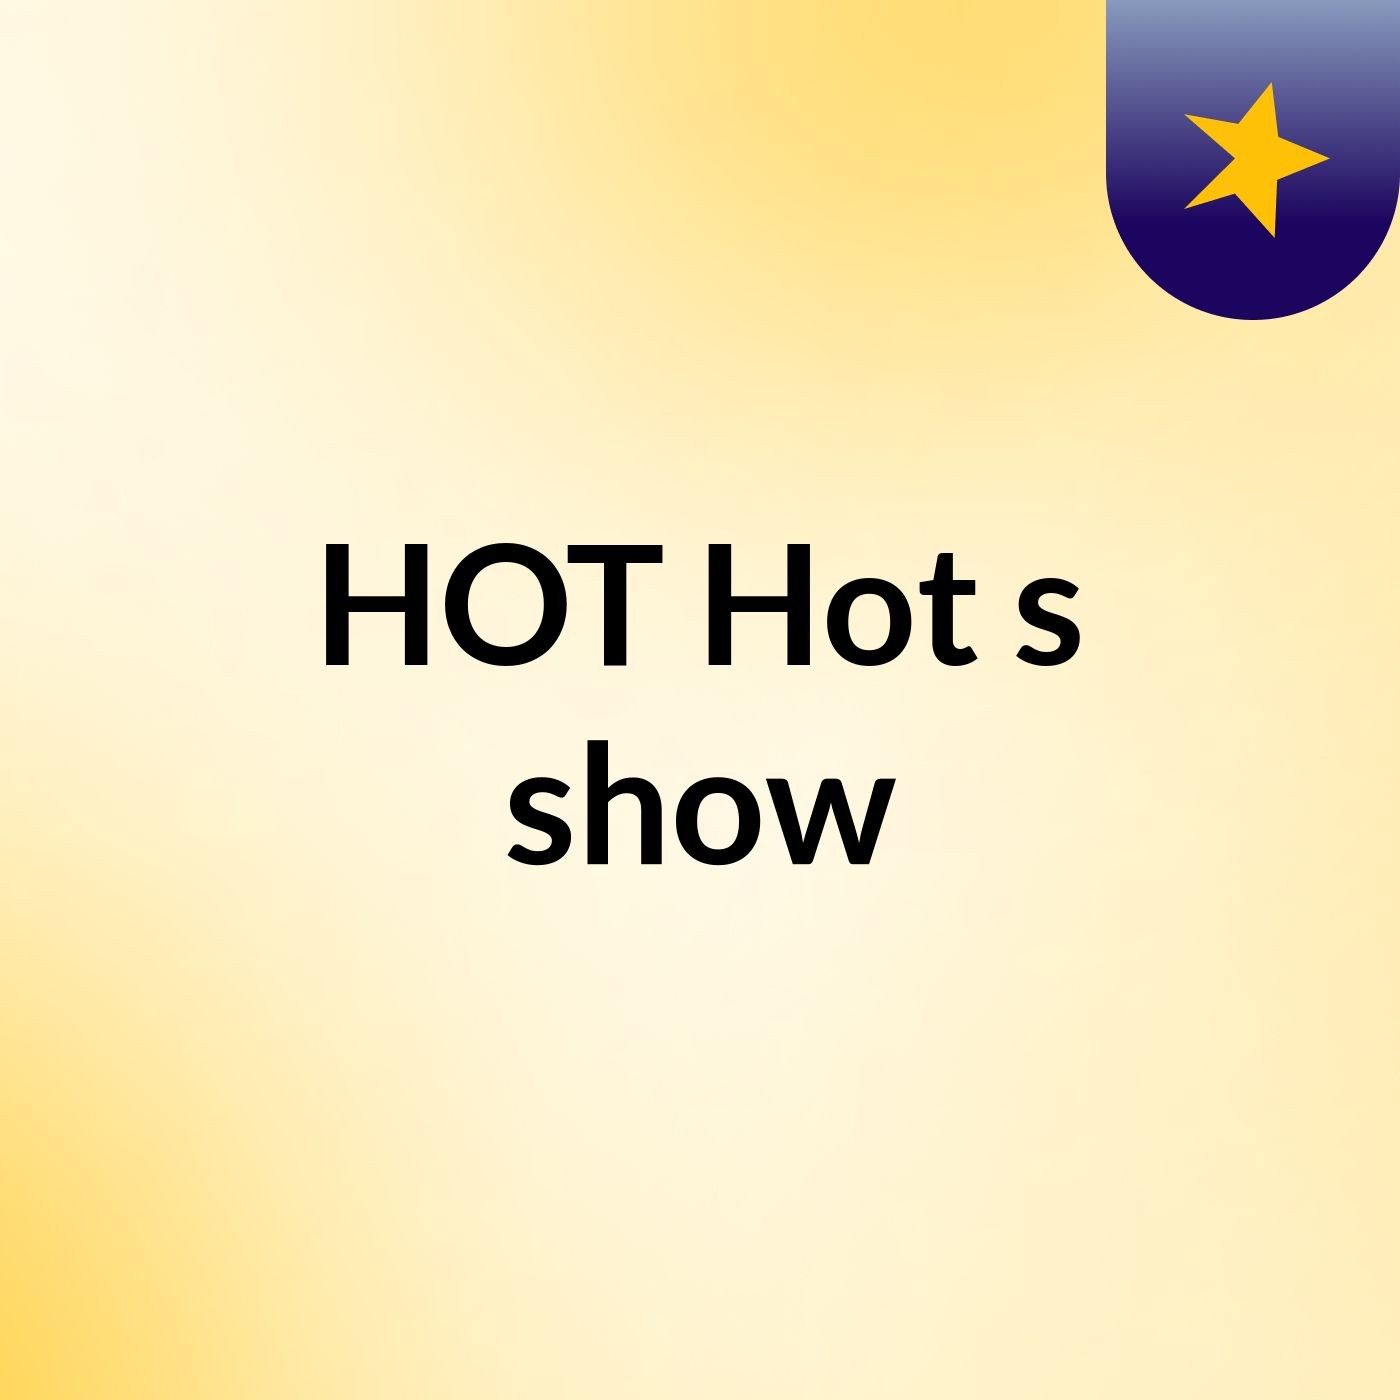 HOT Hot's show